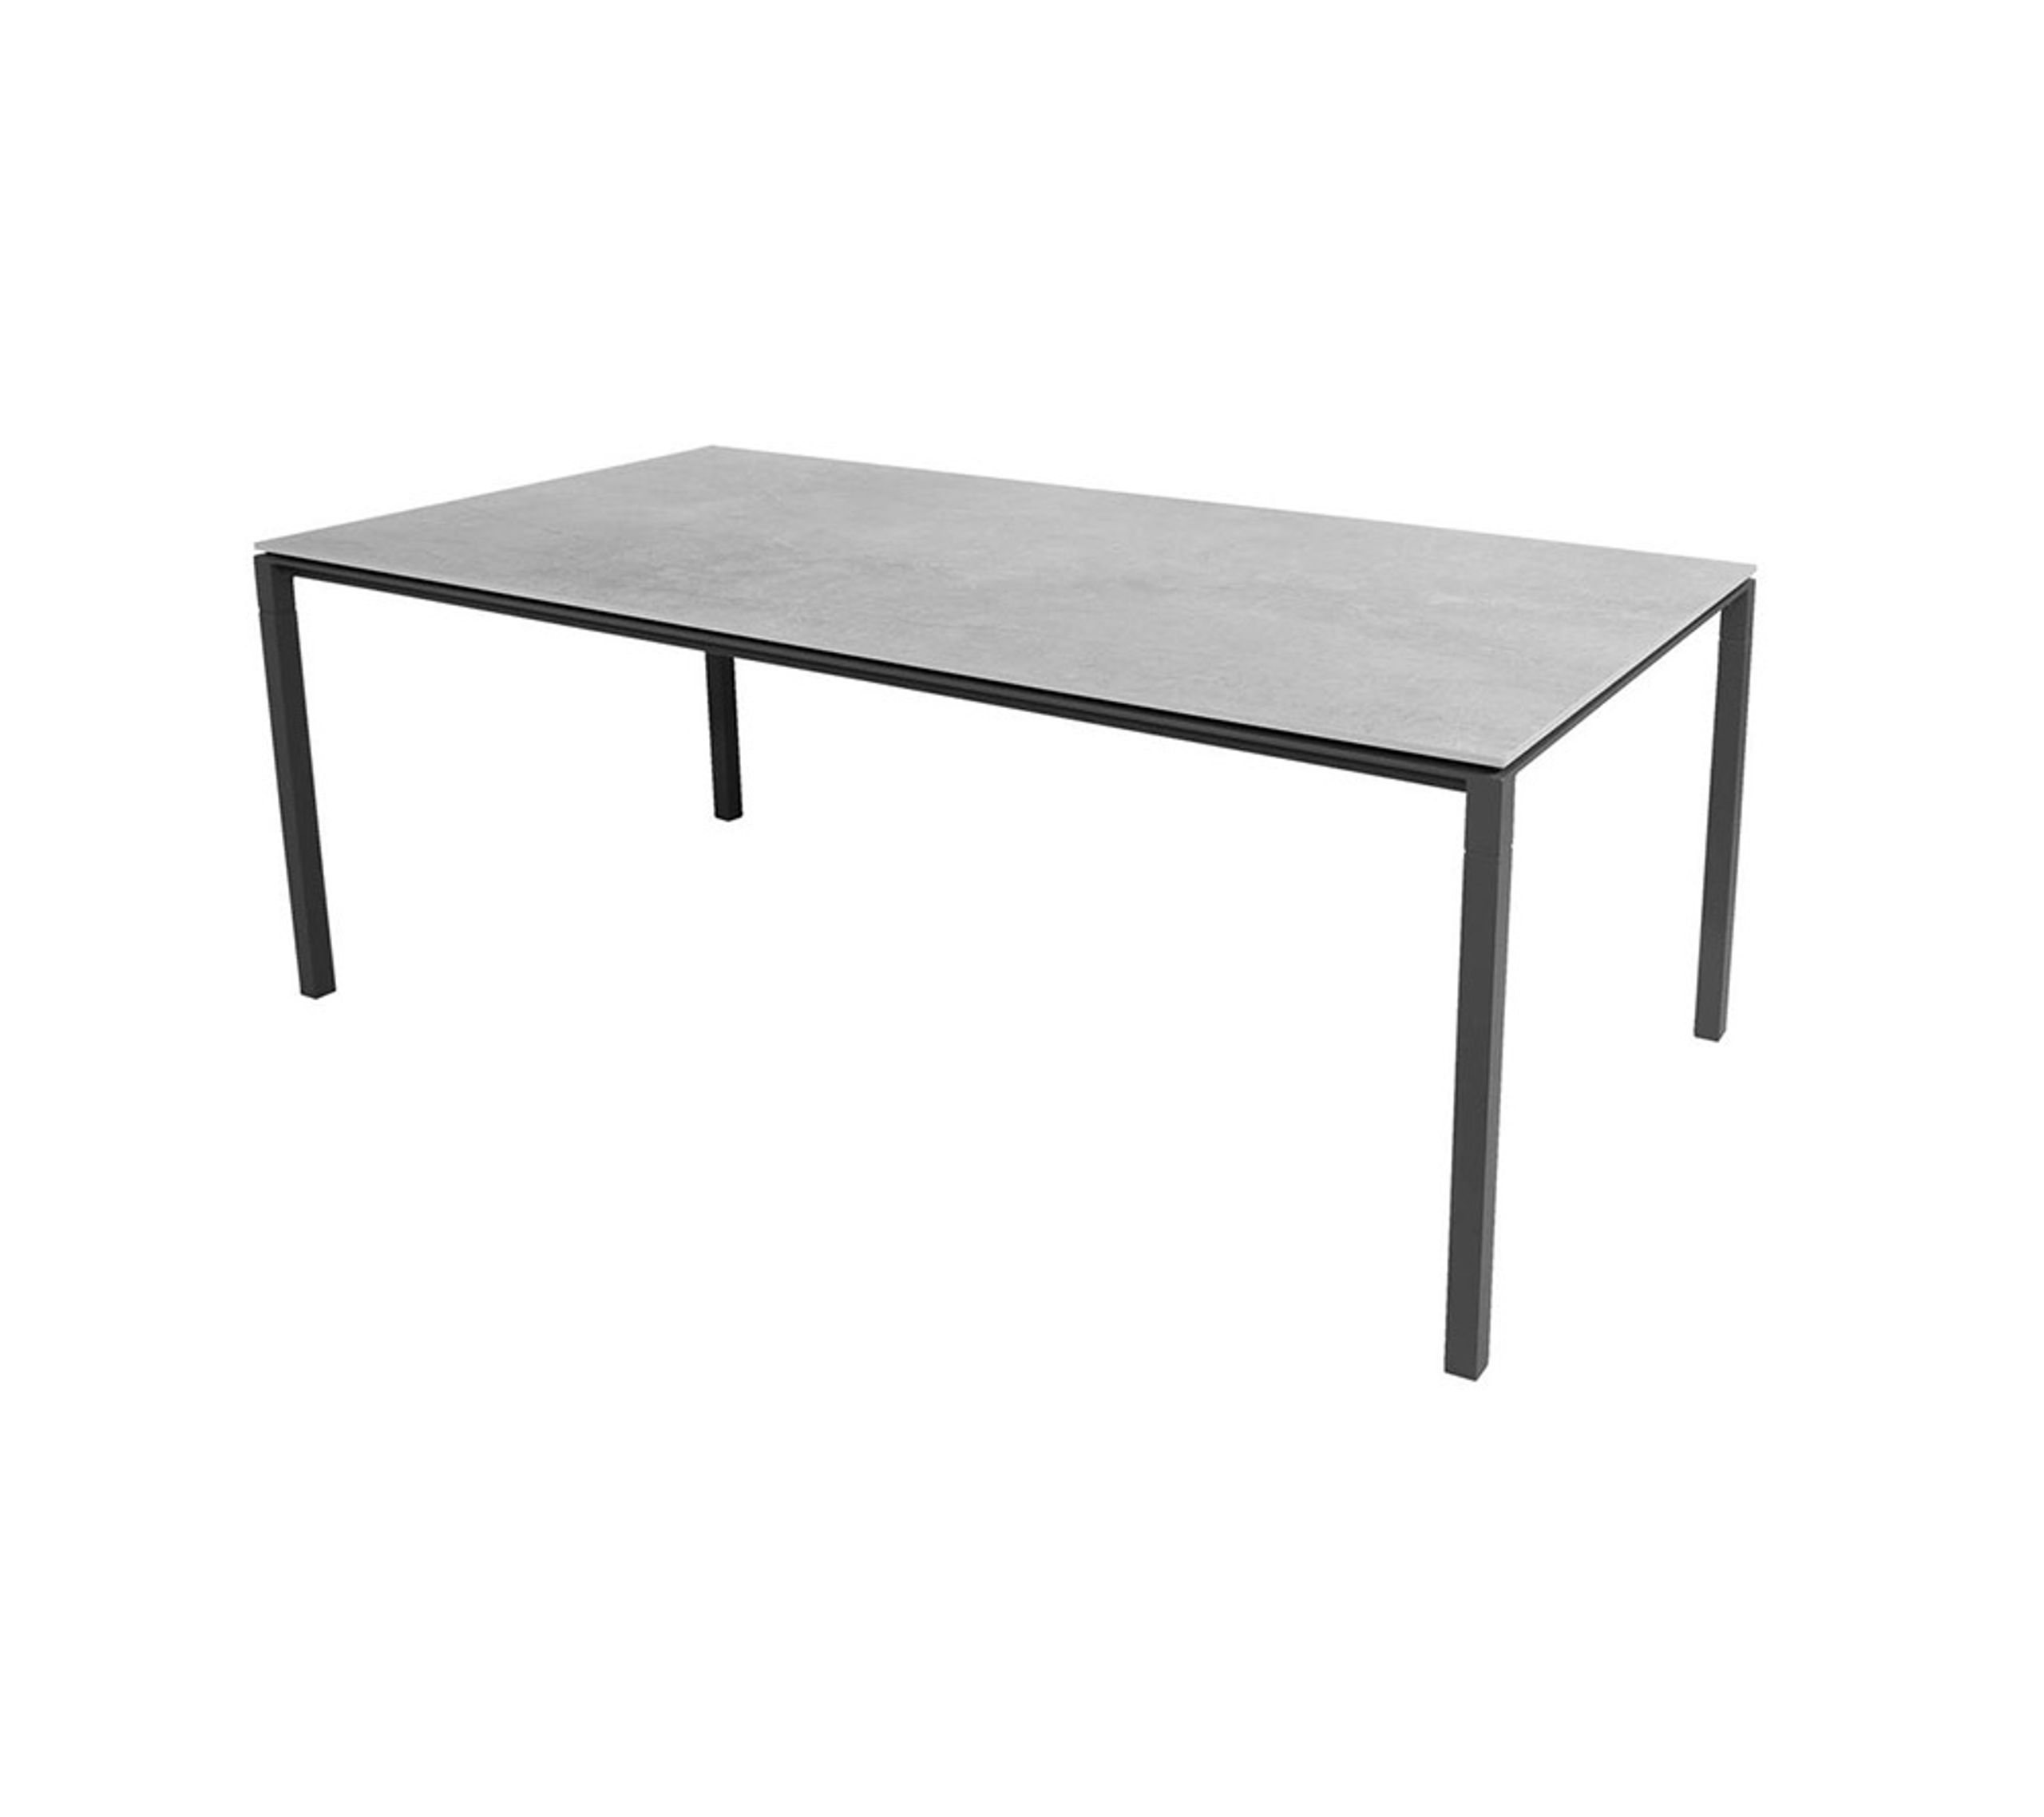 Cane-line - Spisebord - Pure Table - 200x100 - Stel: Lavagrå Aluminium / Bordplade: Grå Fossil Keramik